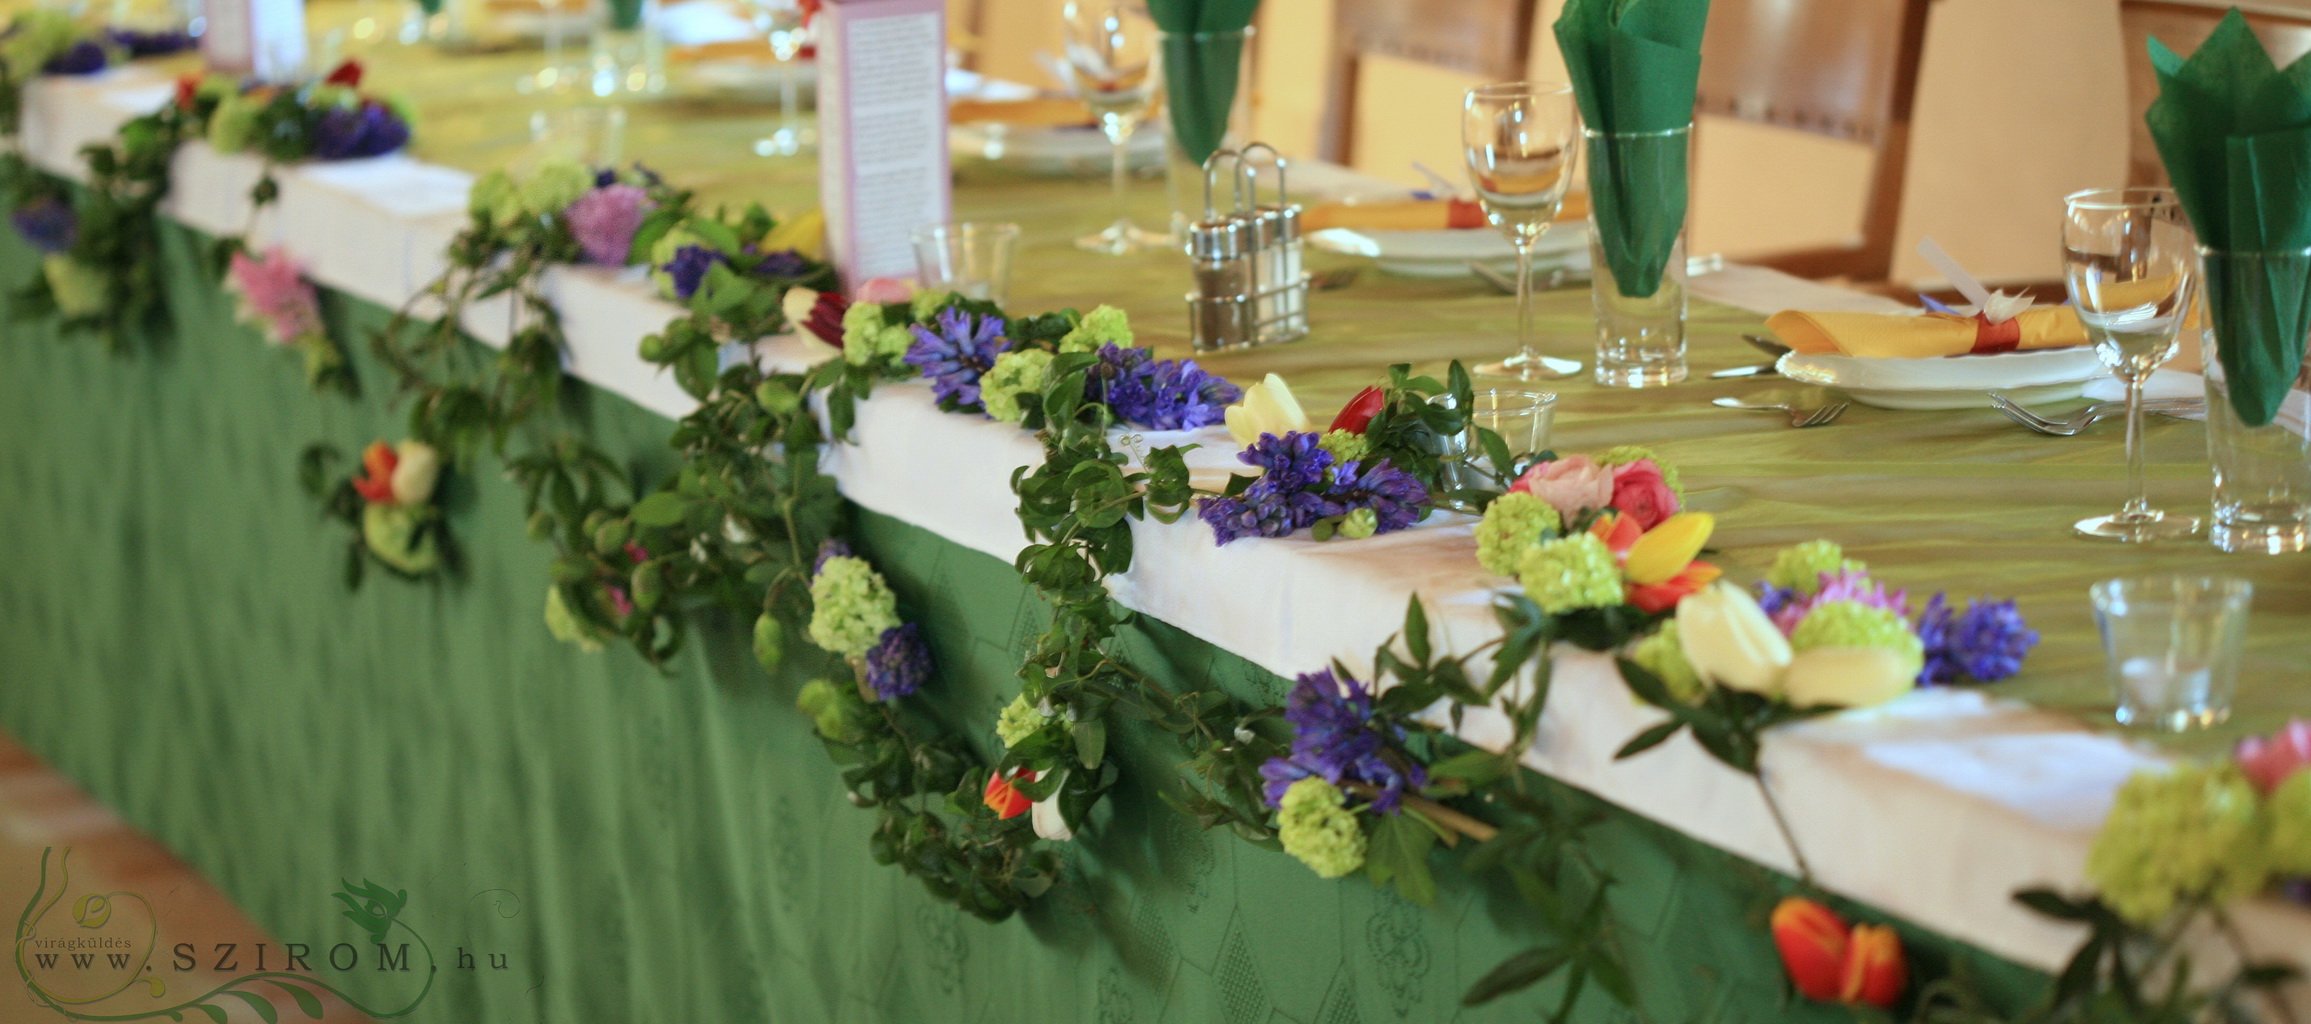 flower delivery Budapest - Main table centerpiece (passion flower, spring flowers, orange, blue) Balaton, wedding